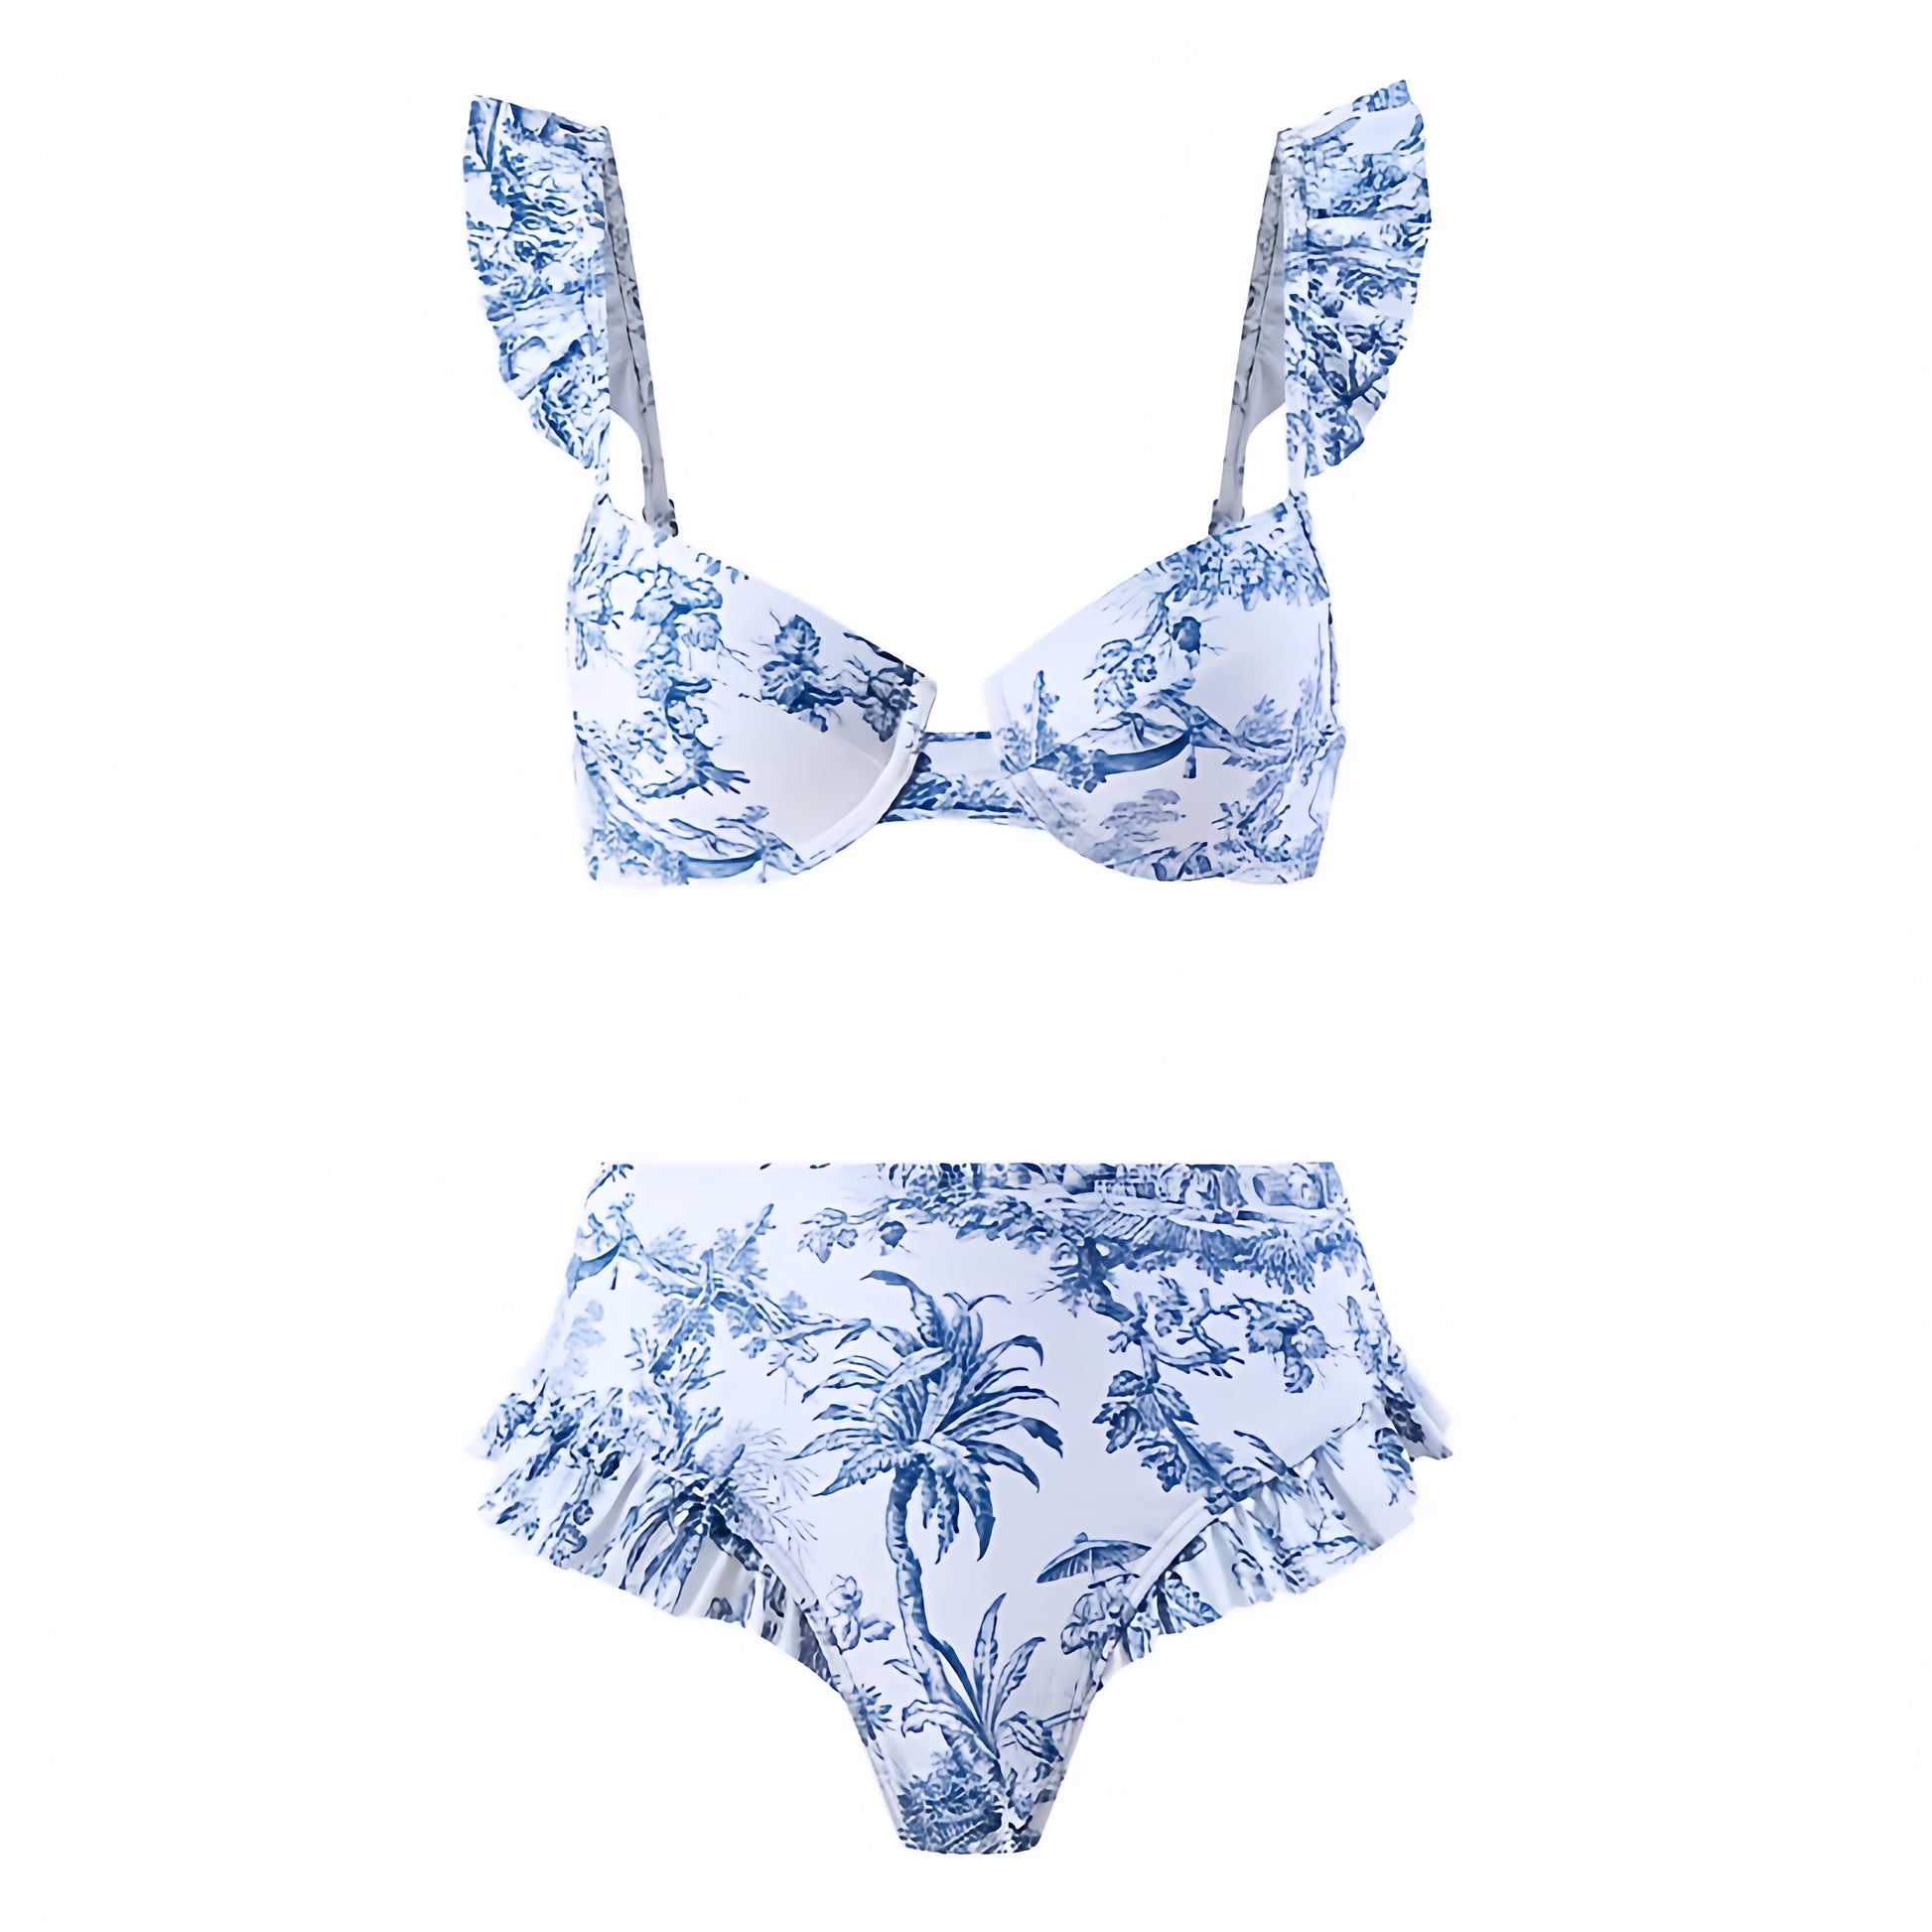 floral-print-blue-and-white-flower-patterned-ruffle-trim-sweetheart-neckline-spaghetti-strap-sleeveless-backless-open-back-underwire-push-up-cheeky-thong-boho-bohemian-2-piece-bikini-set-top-bottoms-swimsuit-swimwear-bathing-suit-women-ladies-teens-tweens-chic-trendy-spring-2024-summer-elegant-classic-classy-feminine-preppy-style-tropical-european-greece-vacation-coastal-granddaughter-grandmillennial-mamma-mia-beach-wear-revolve-loveshackfancy-roller-rabbit-minow-frankies-bikinis-blackbough-kulakinis-dupe